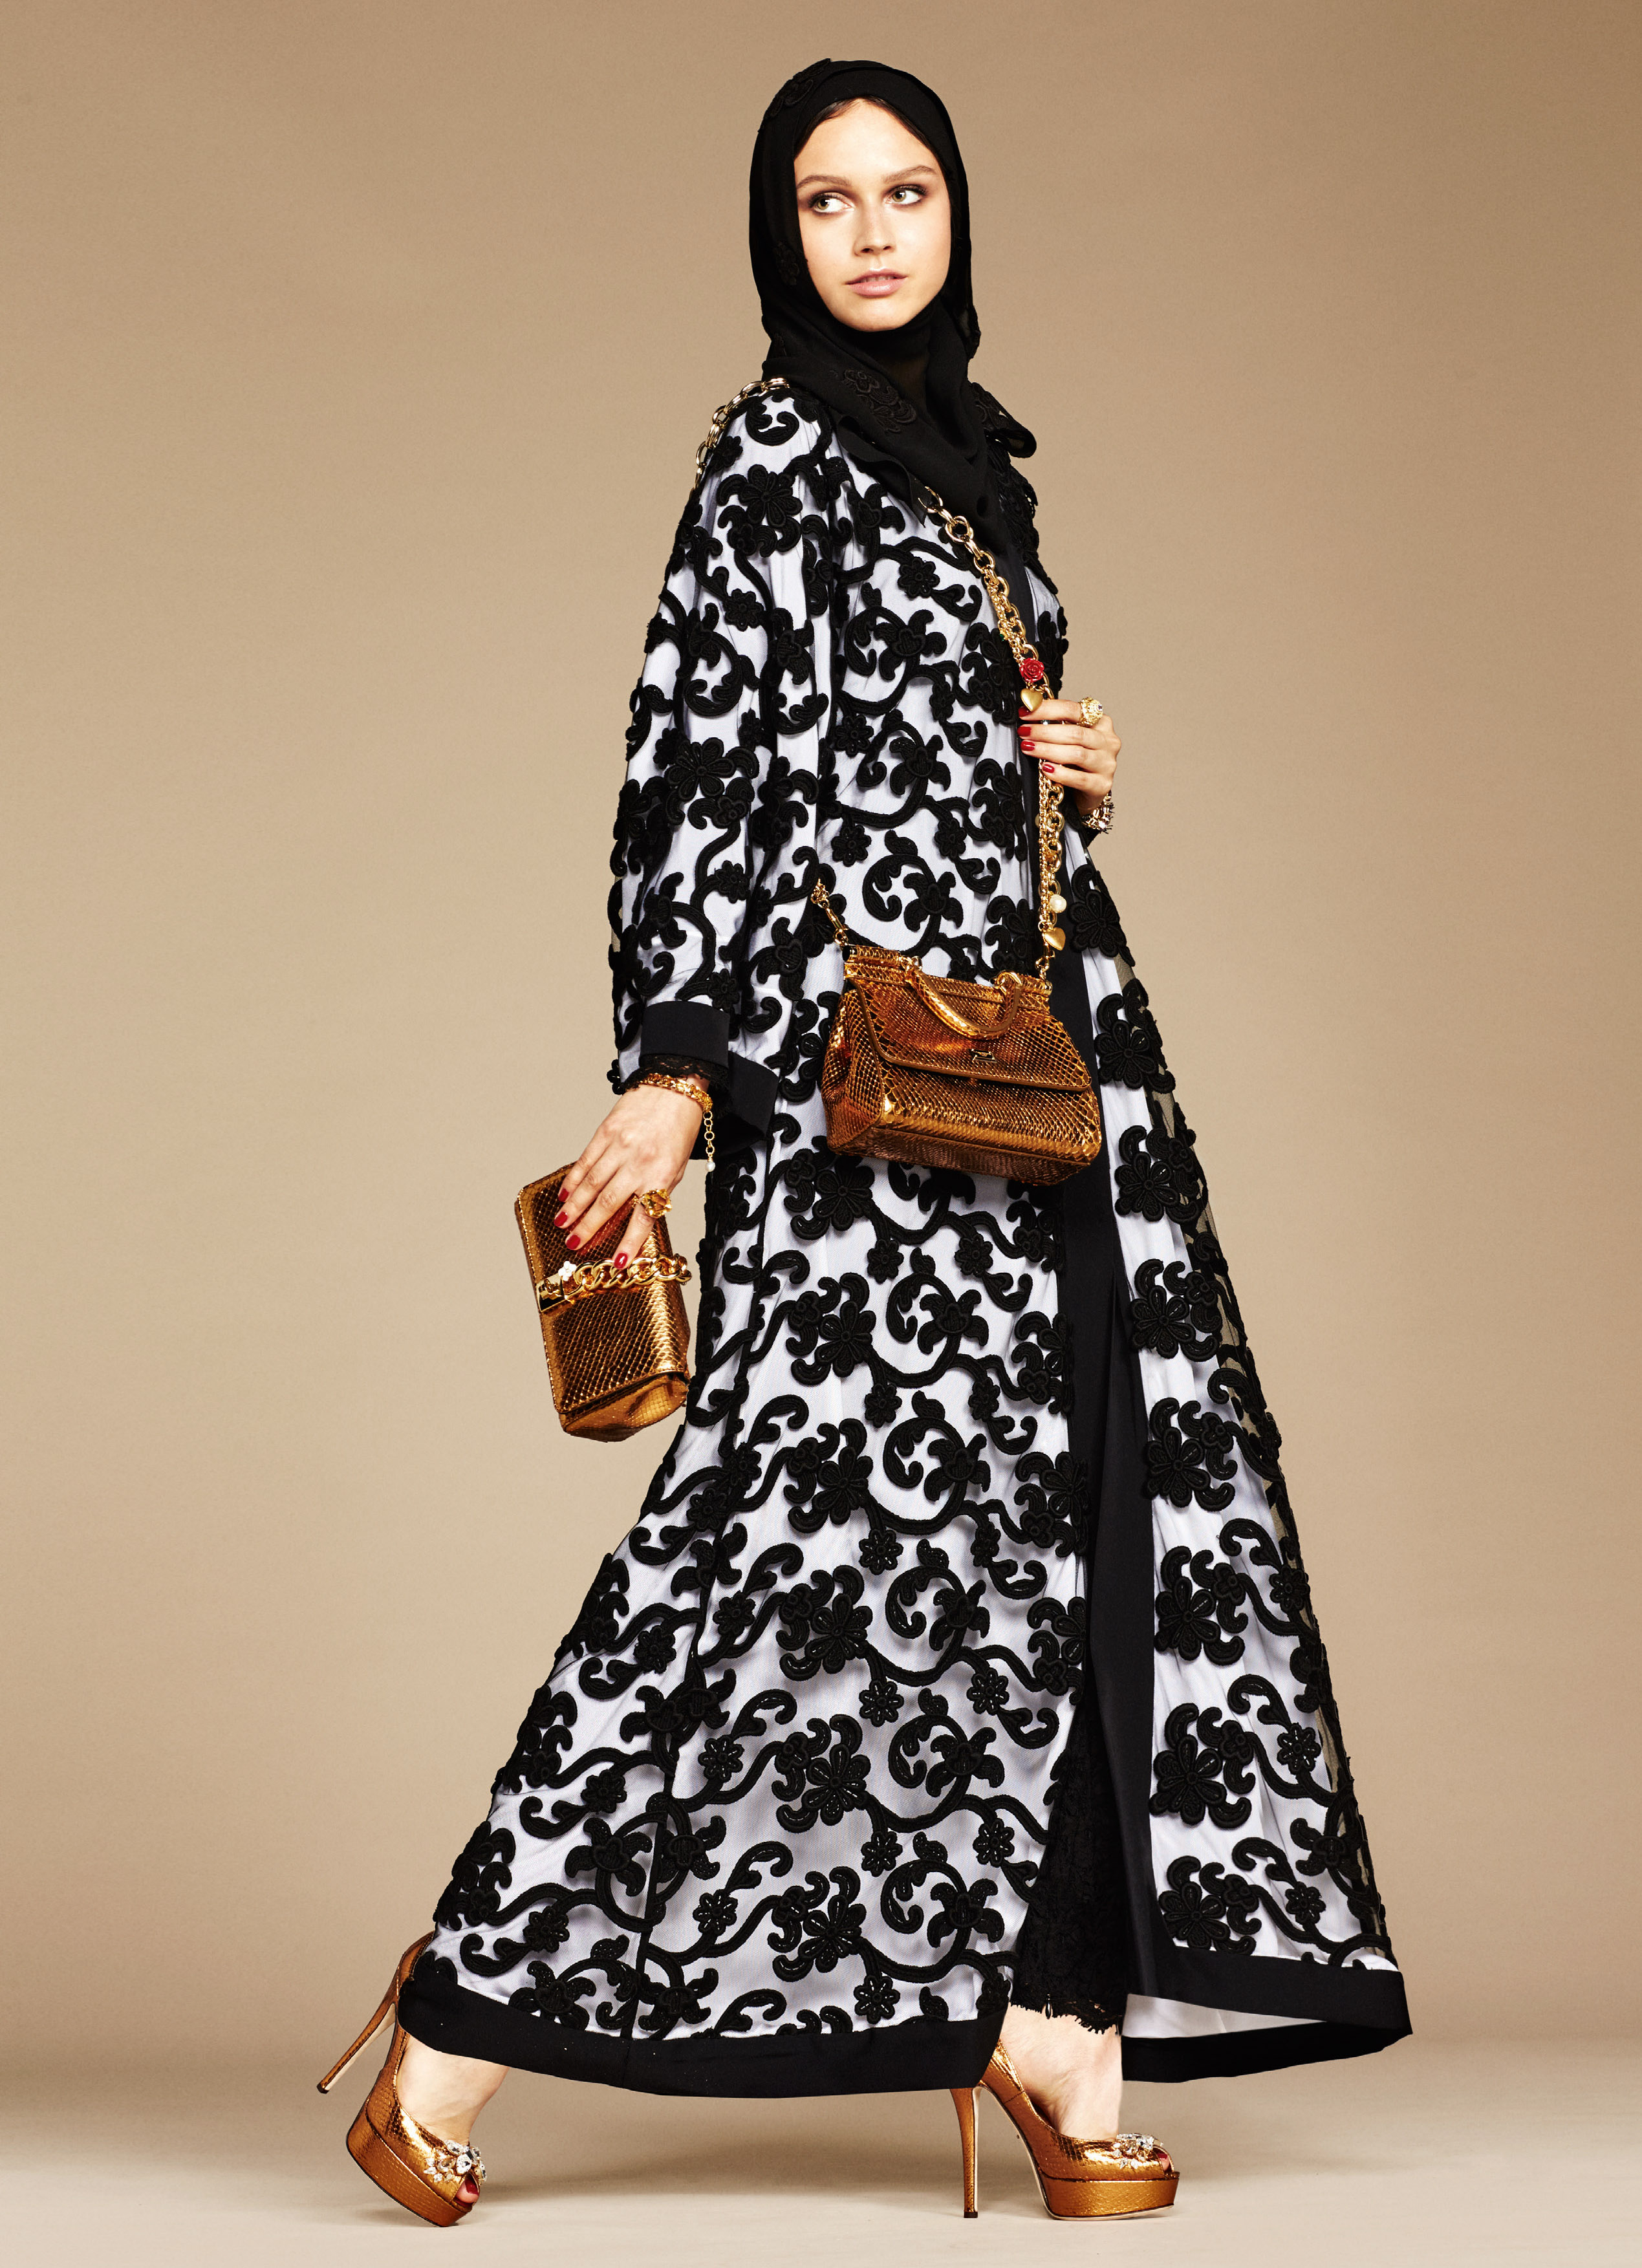 Dolce \u0026 Gabbana debuts line of hijabs 